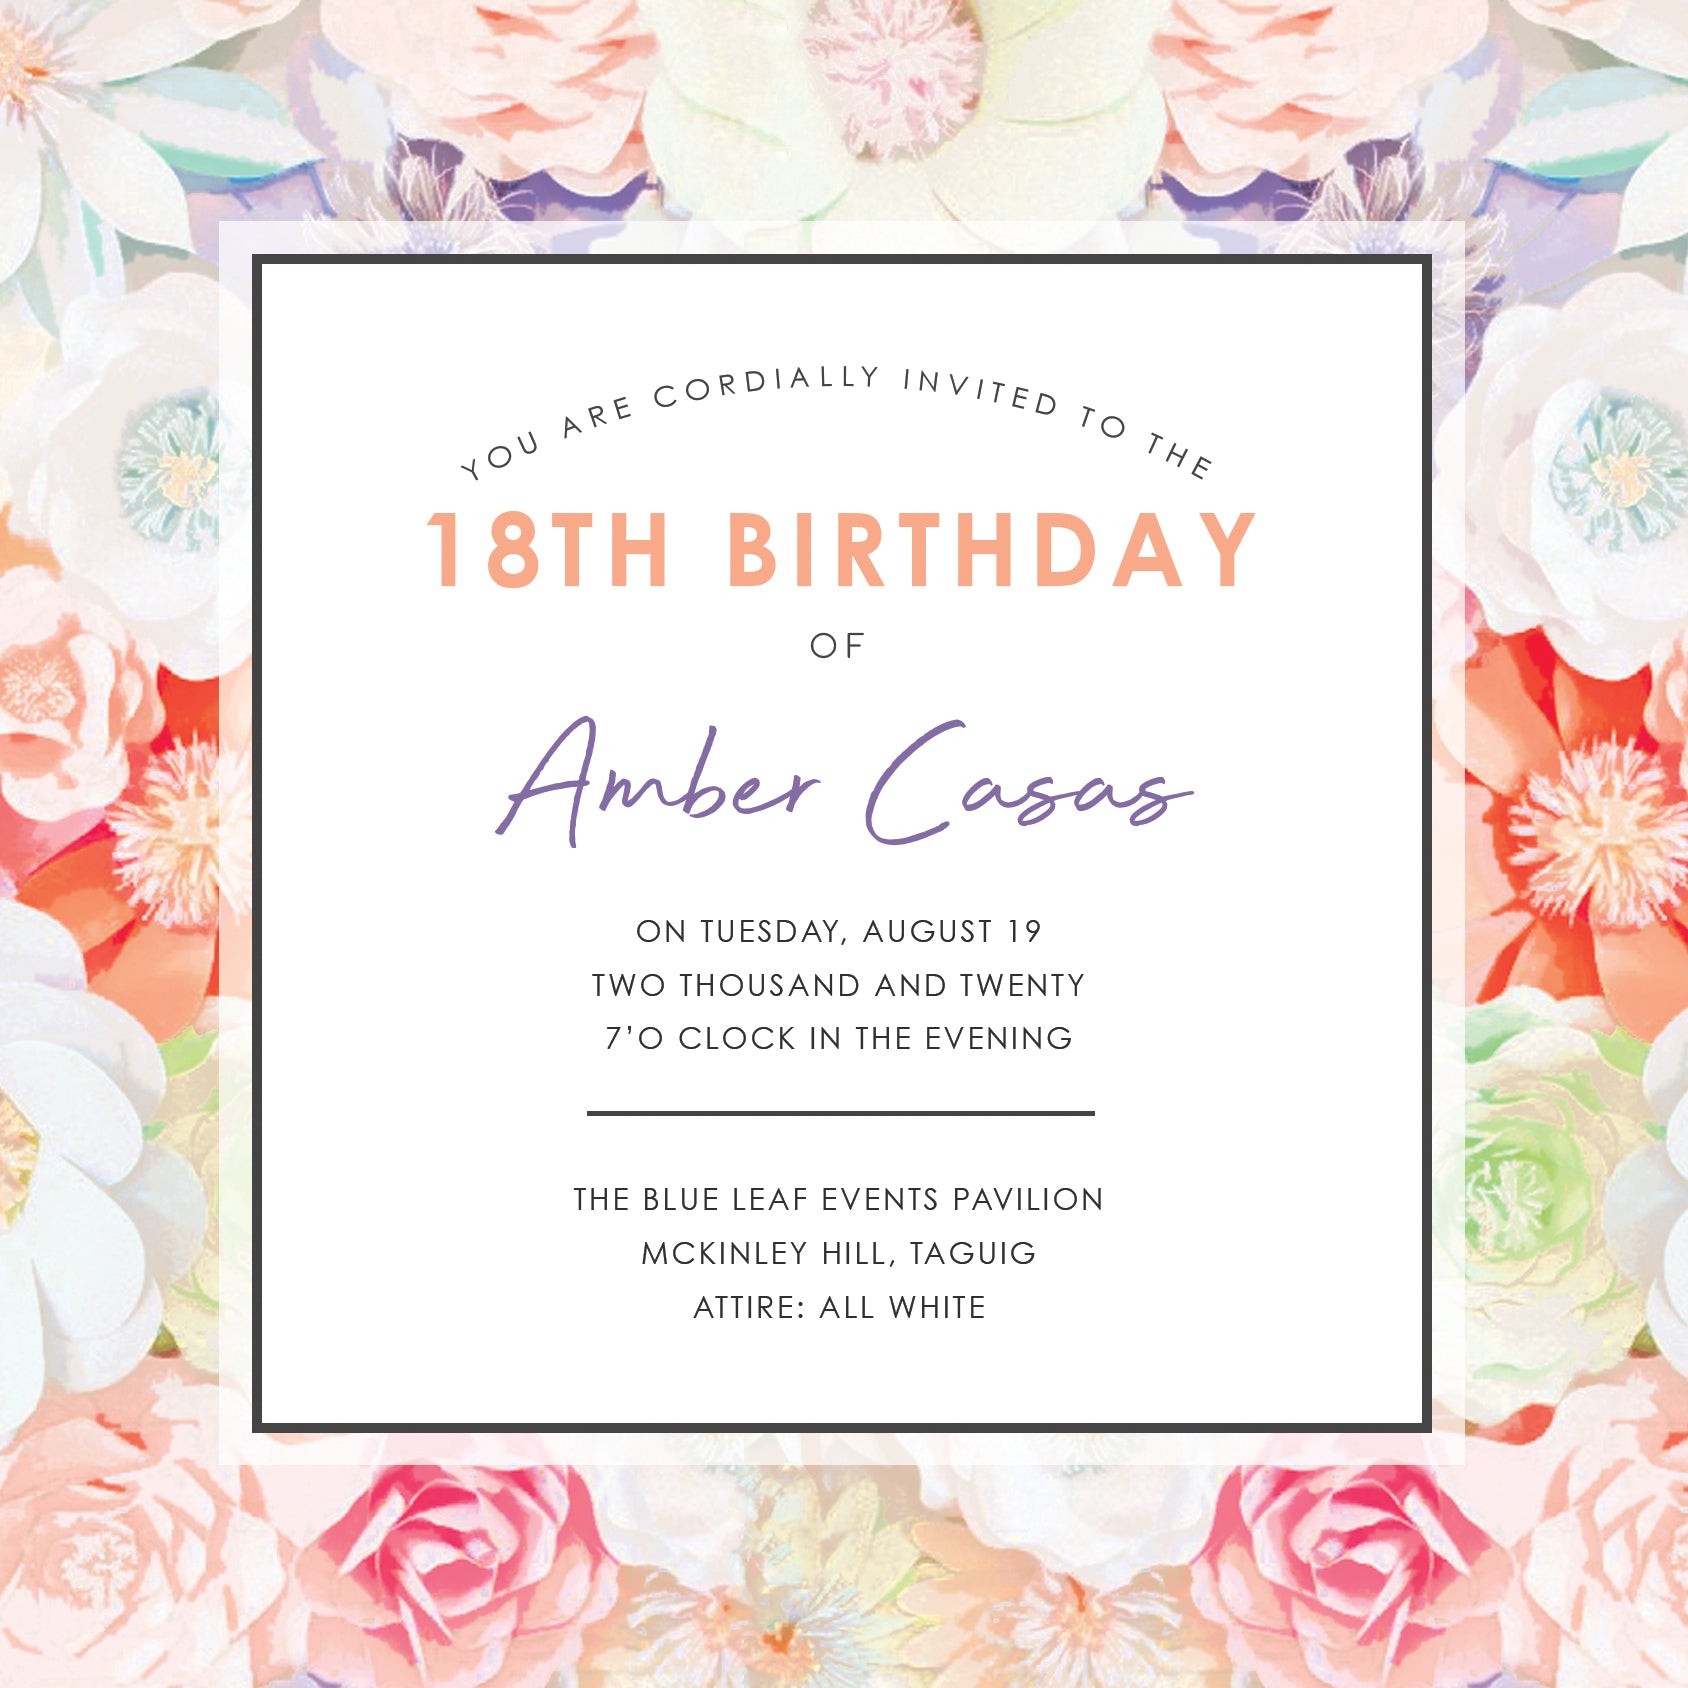 Amber Debut Invitation